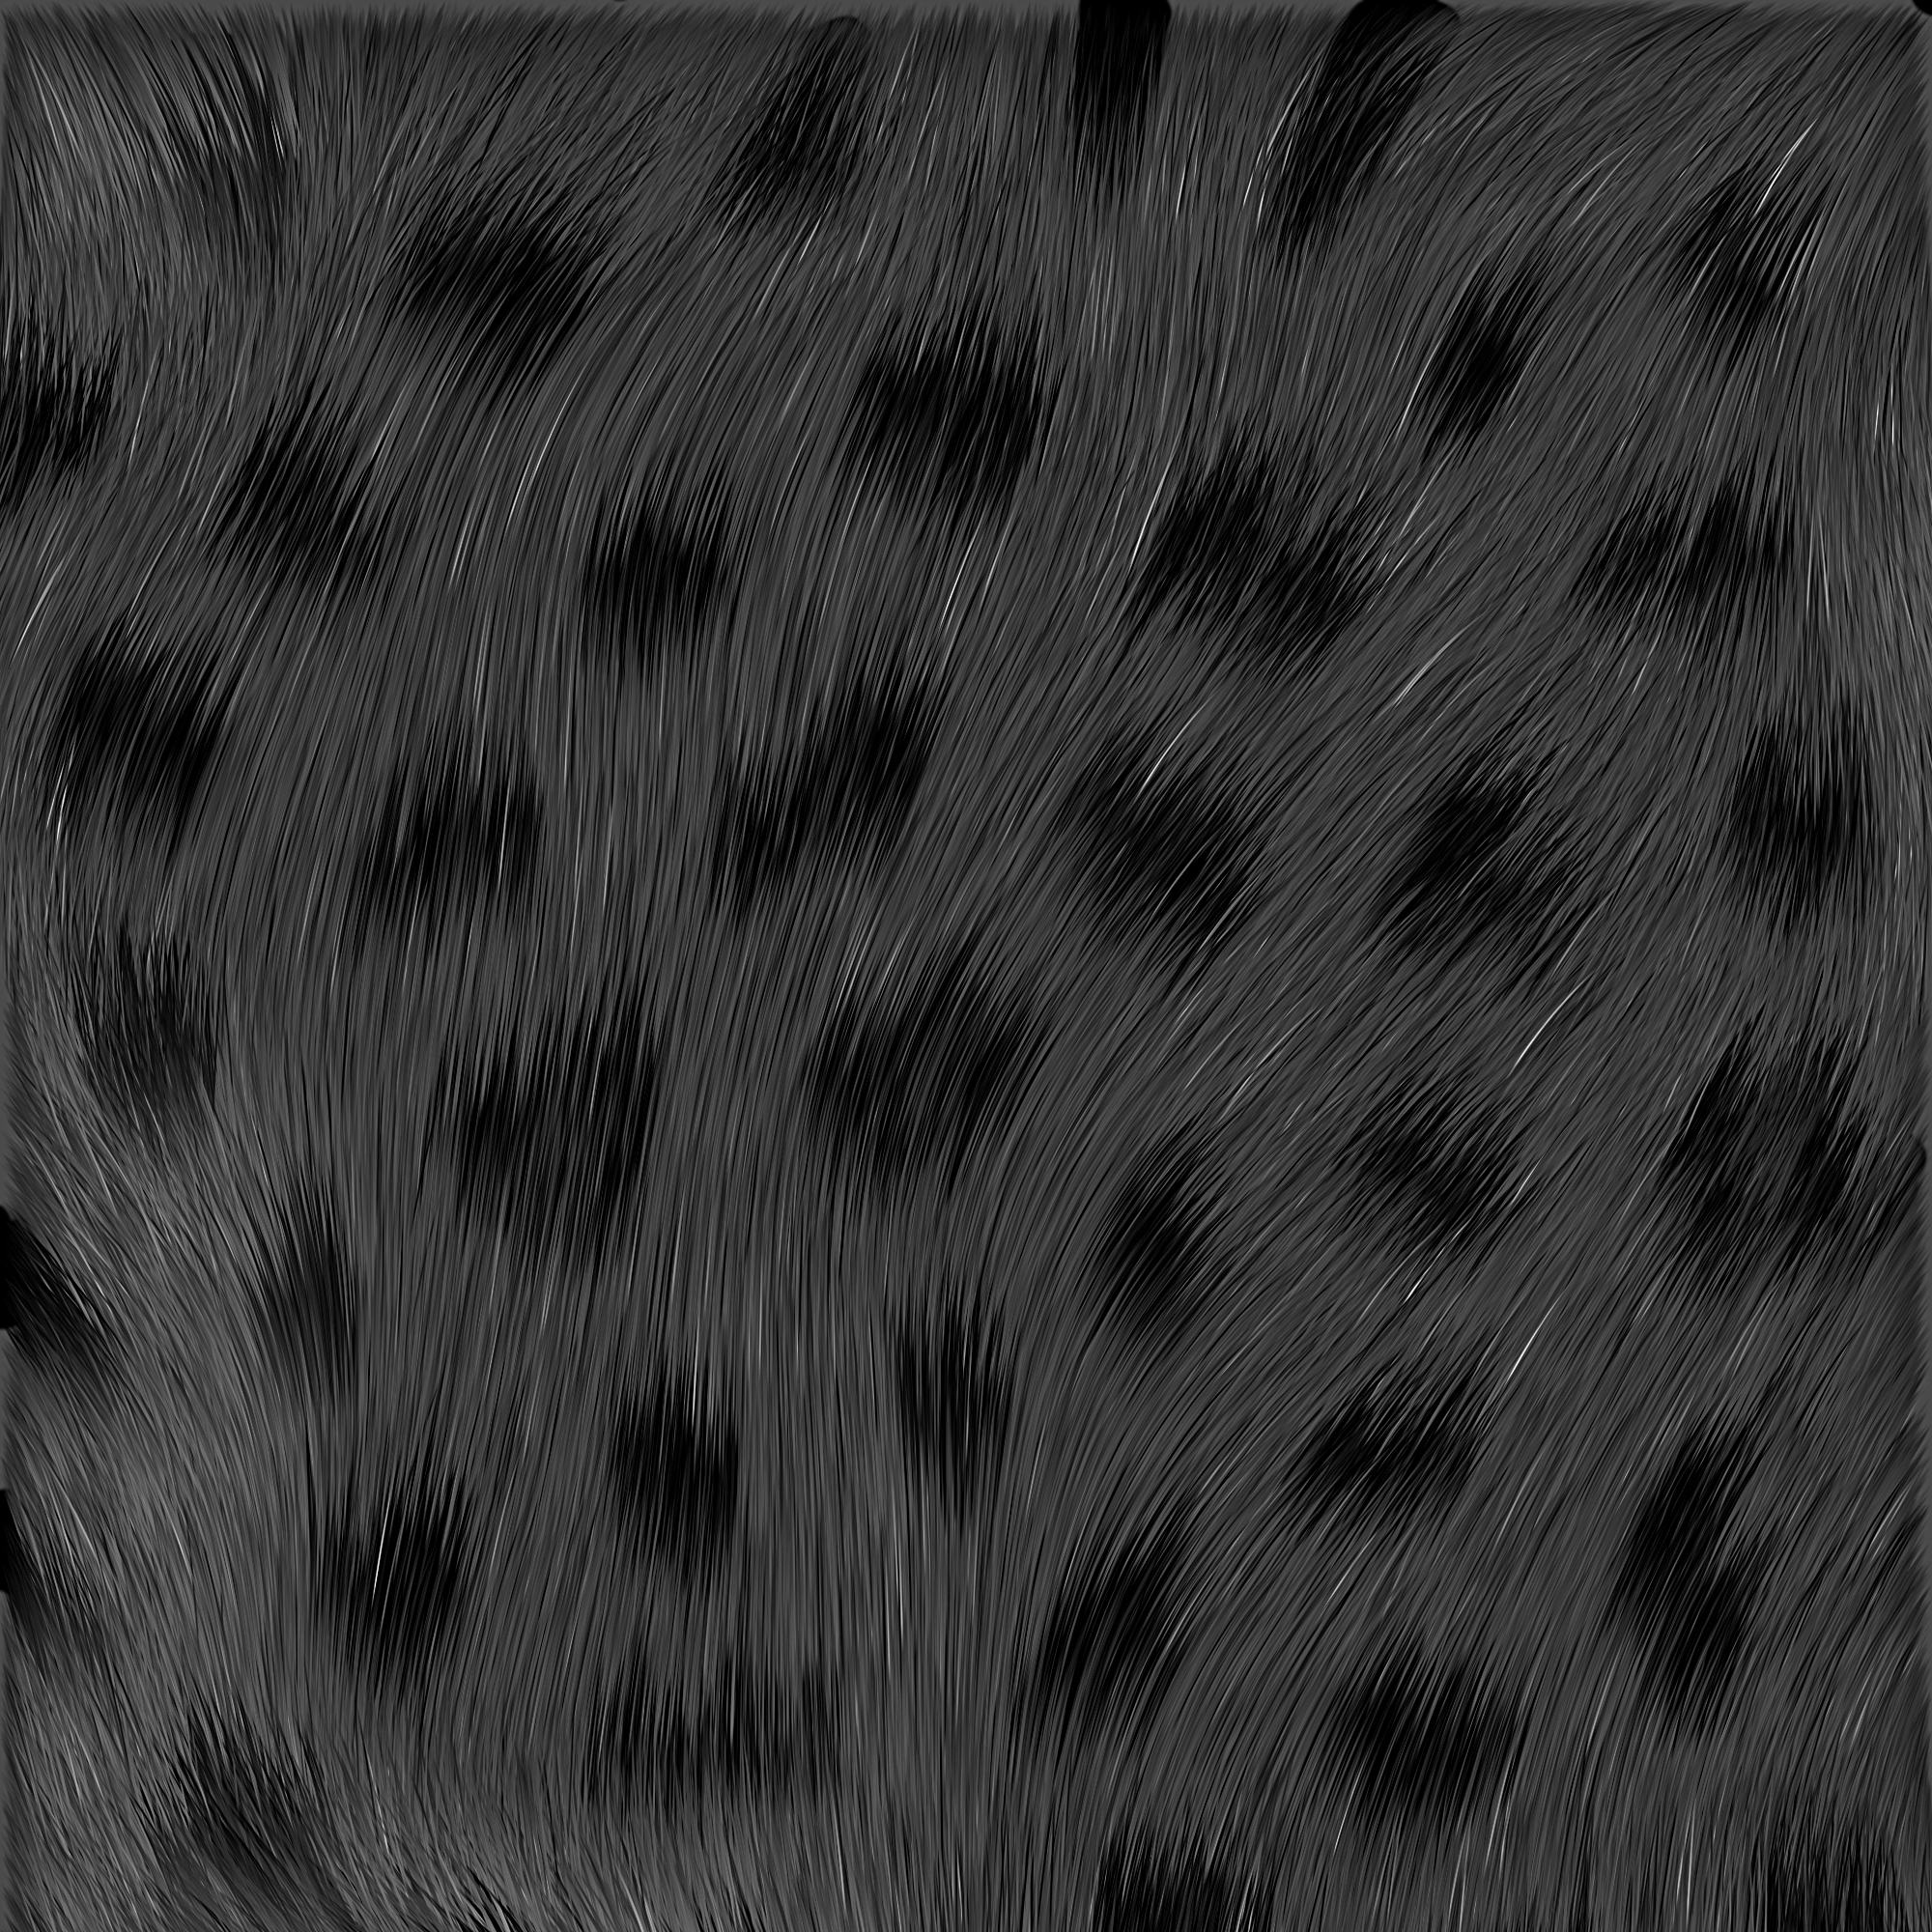 leopard, animal texture, background, skin animal texture, background